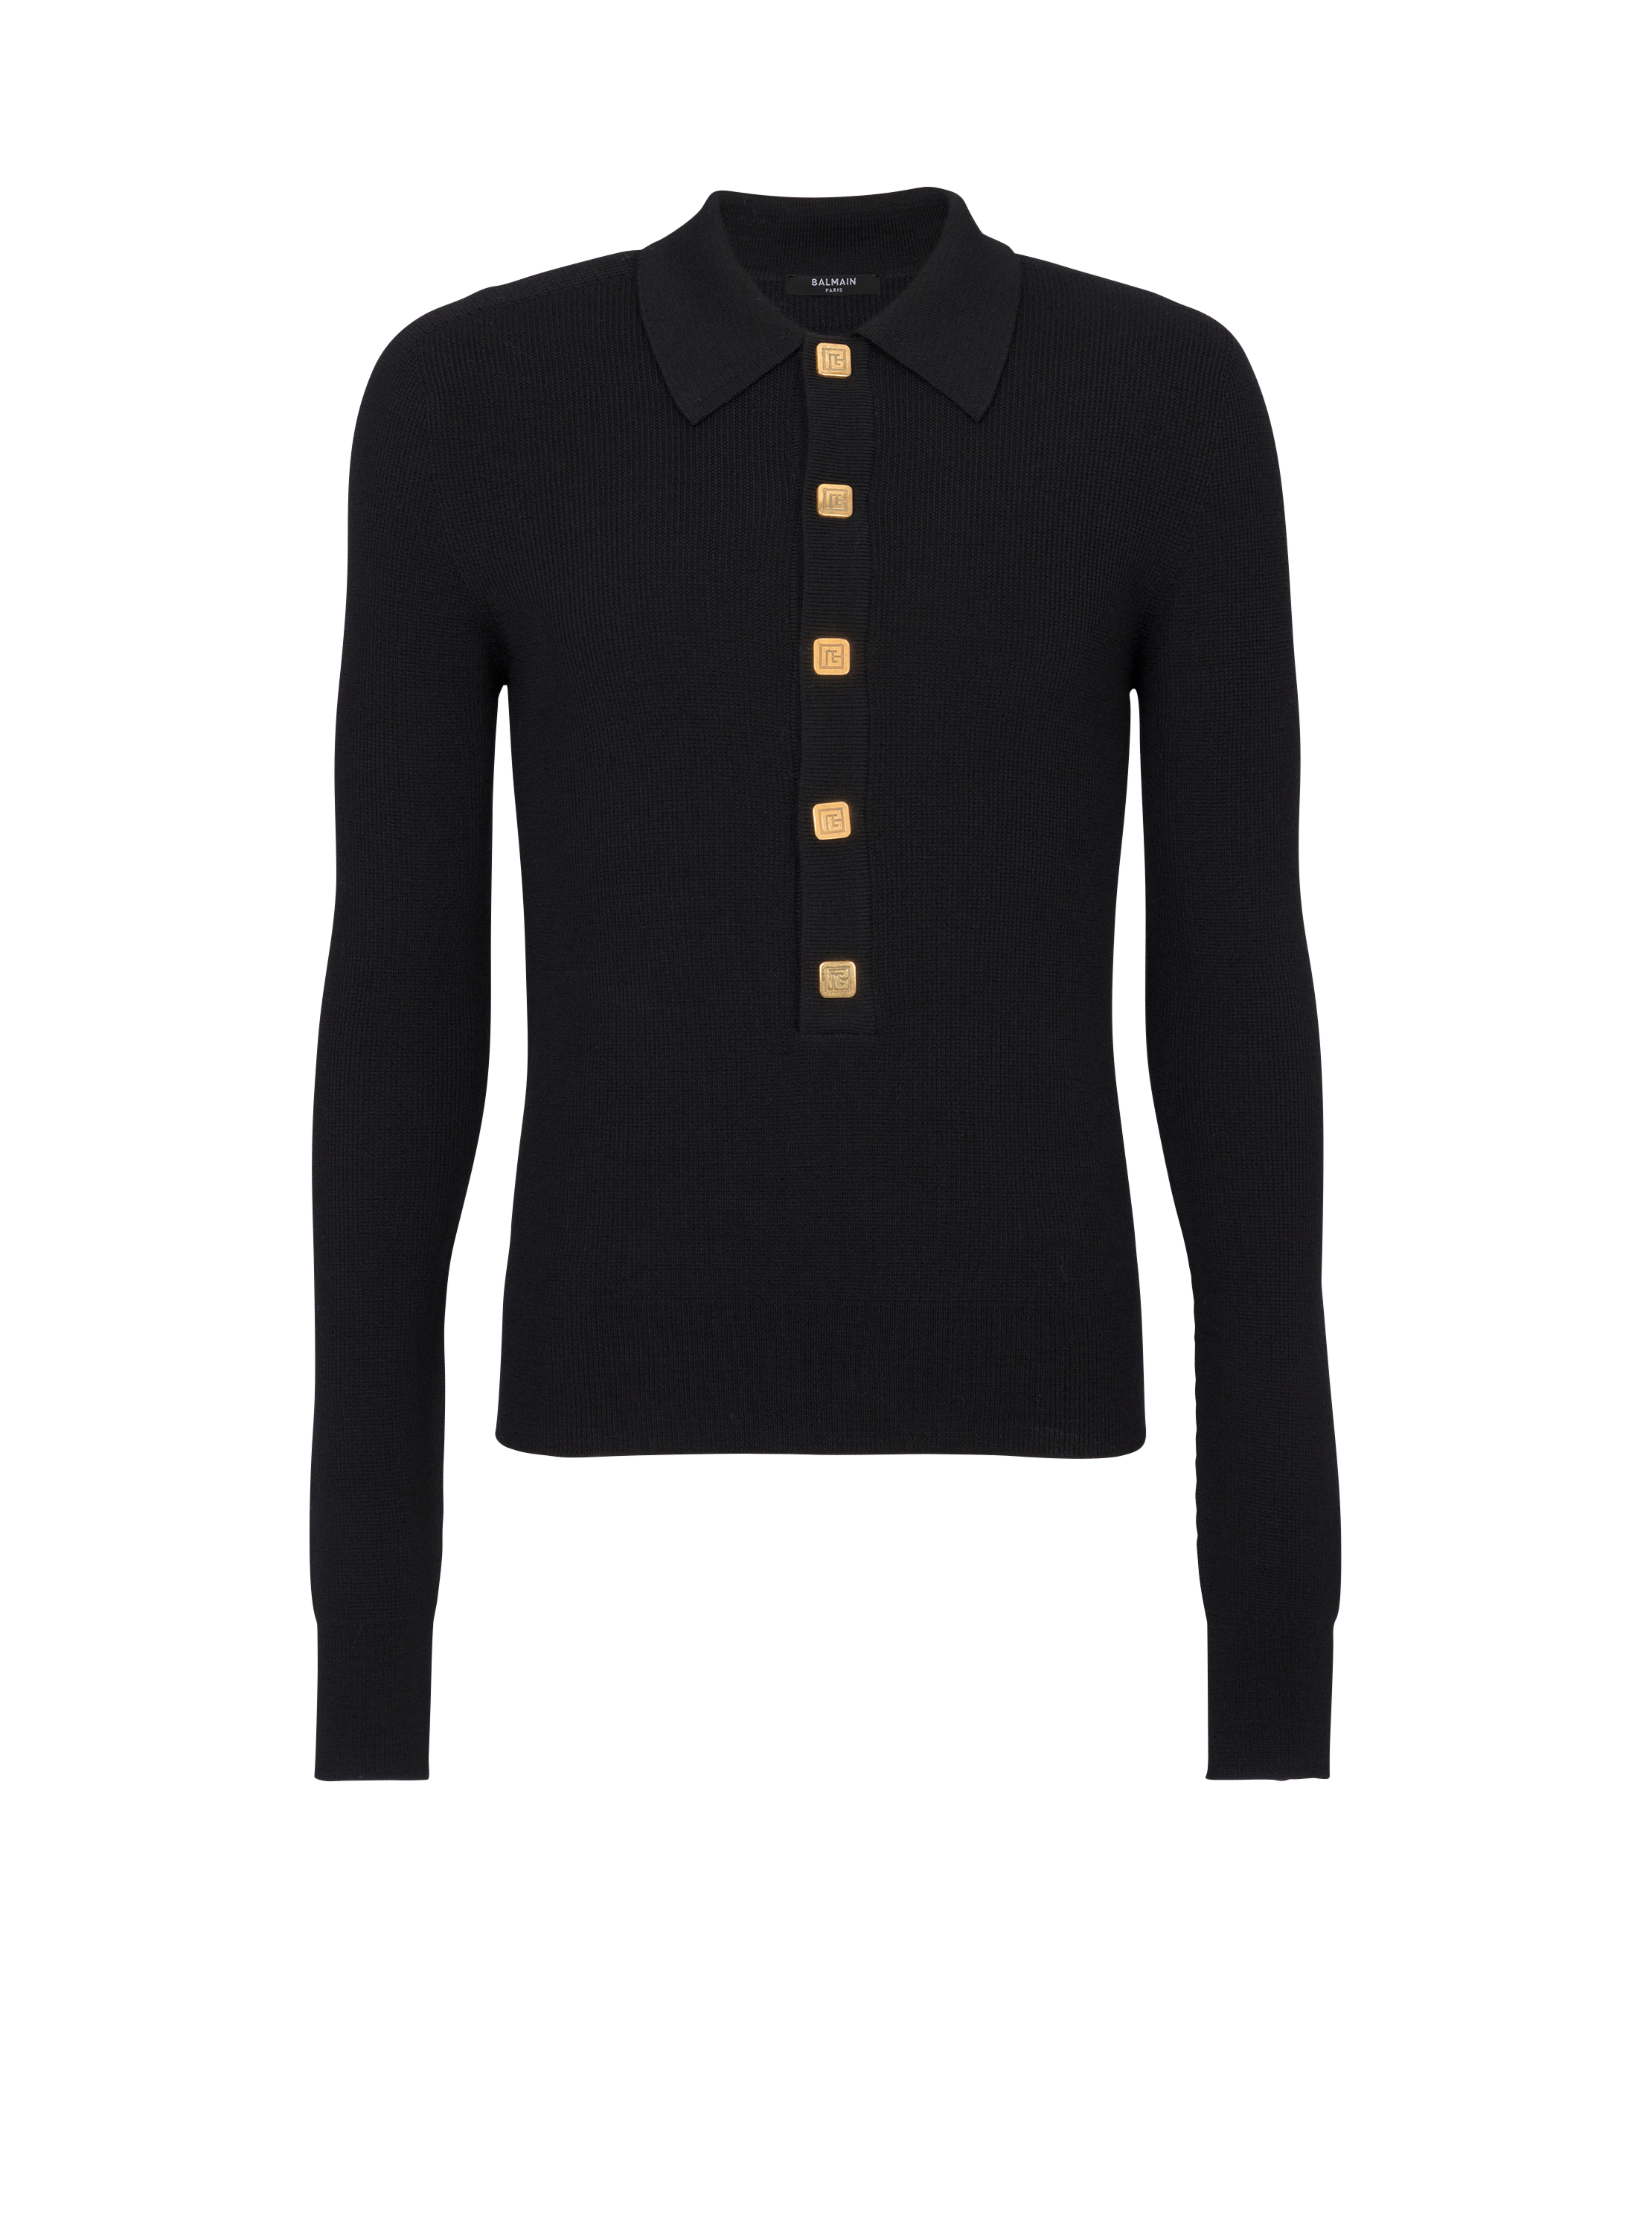 Wool PB buttoned polo shirt, black, hi-res